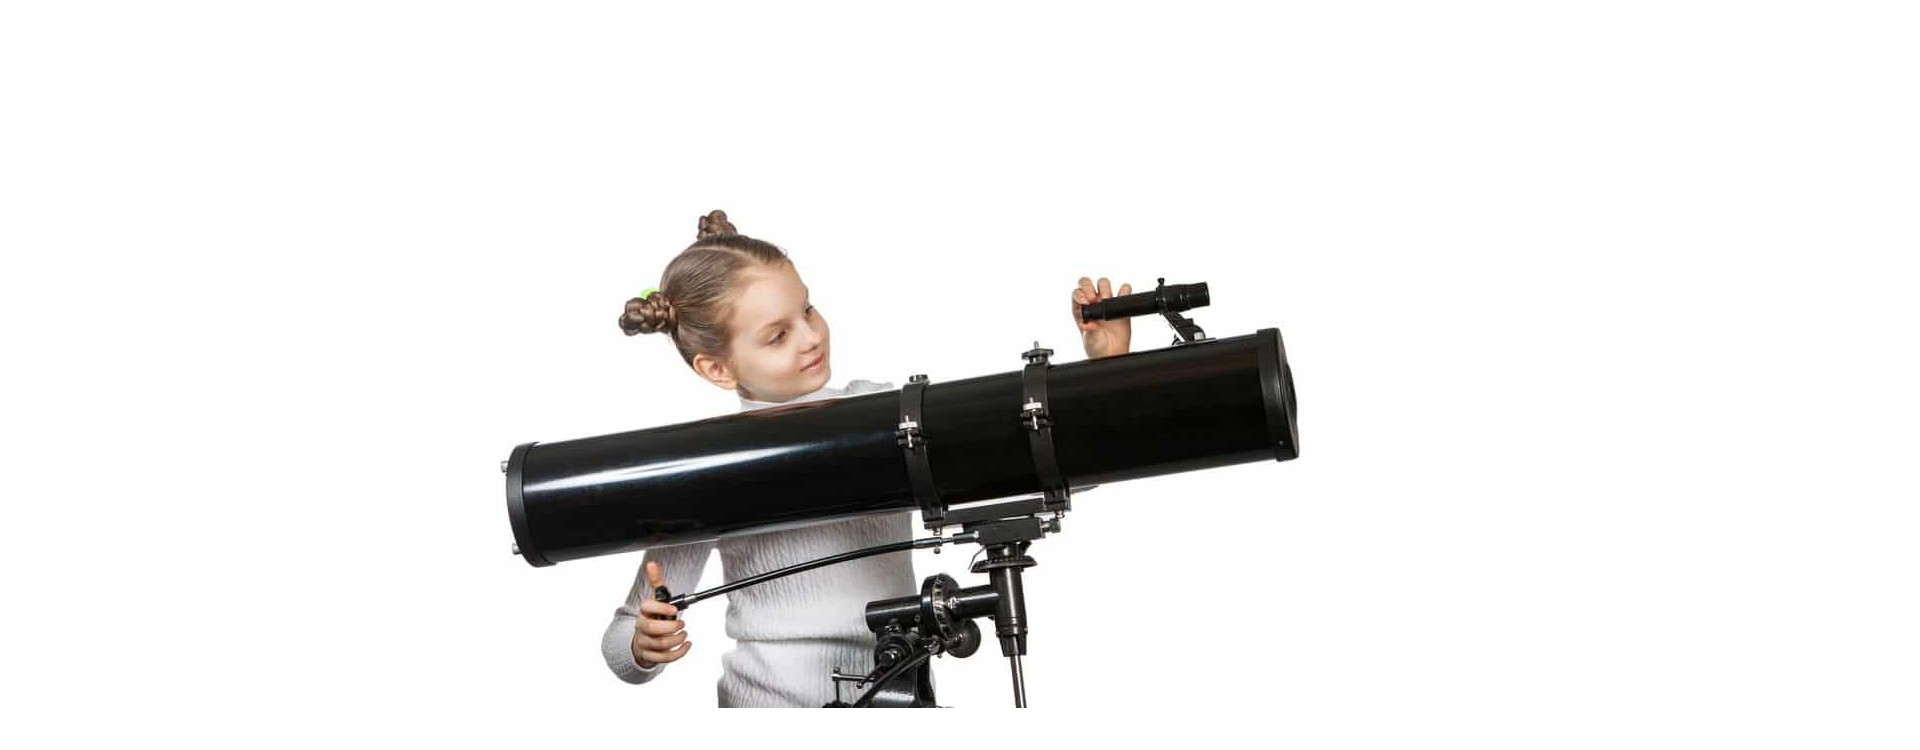 Telescopio para niños